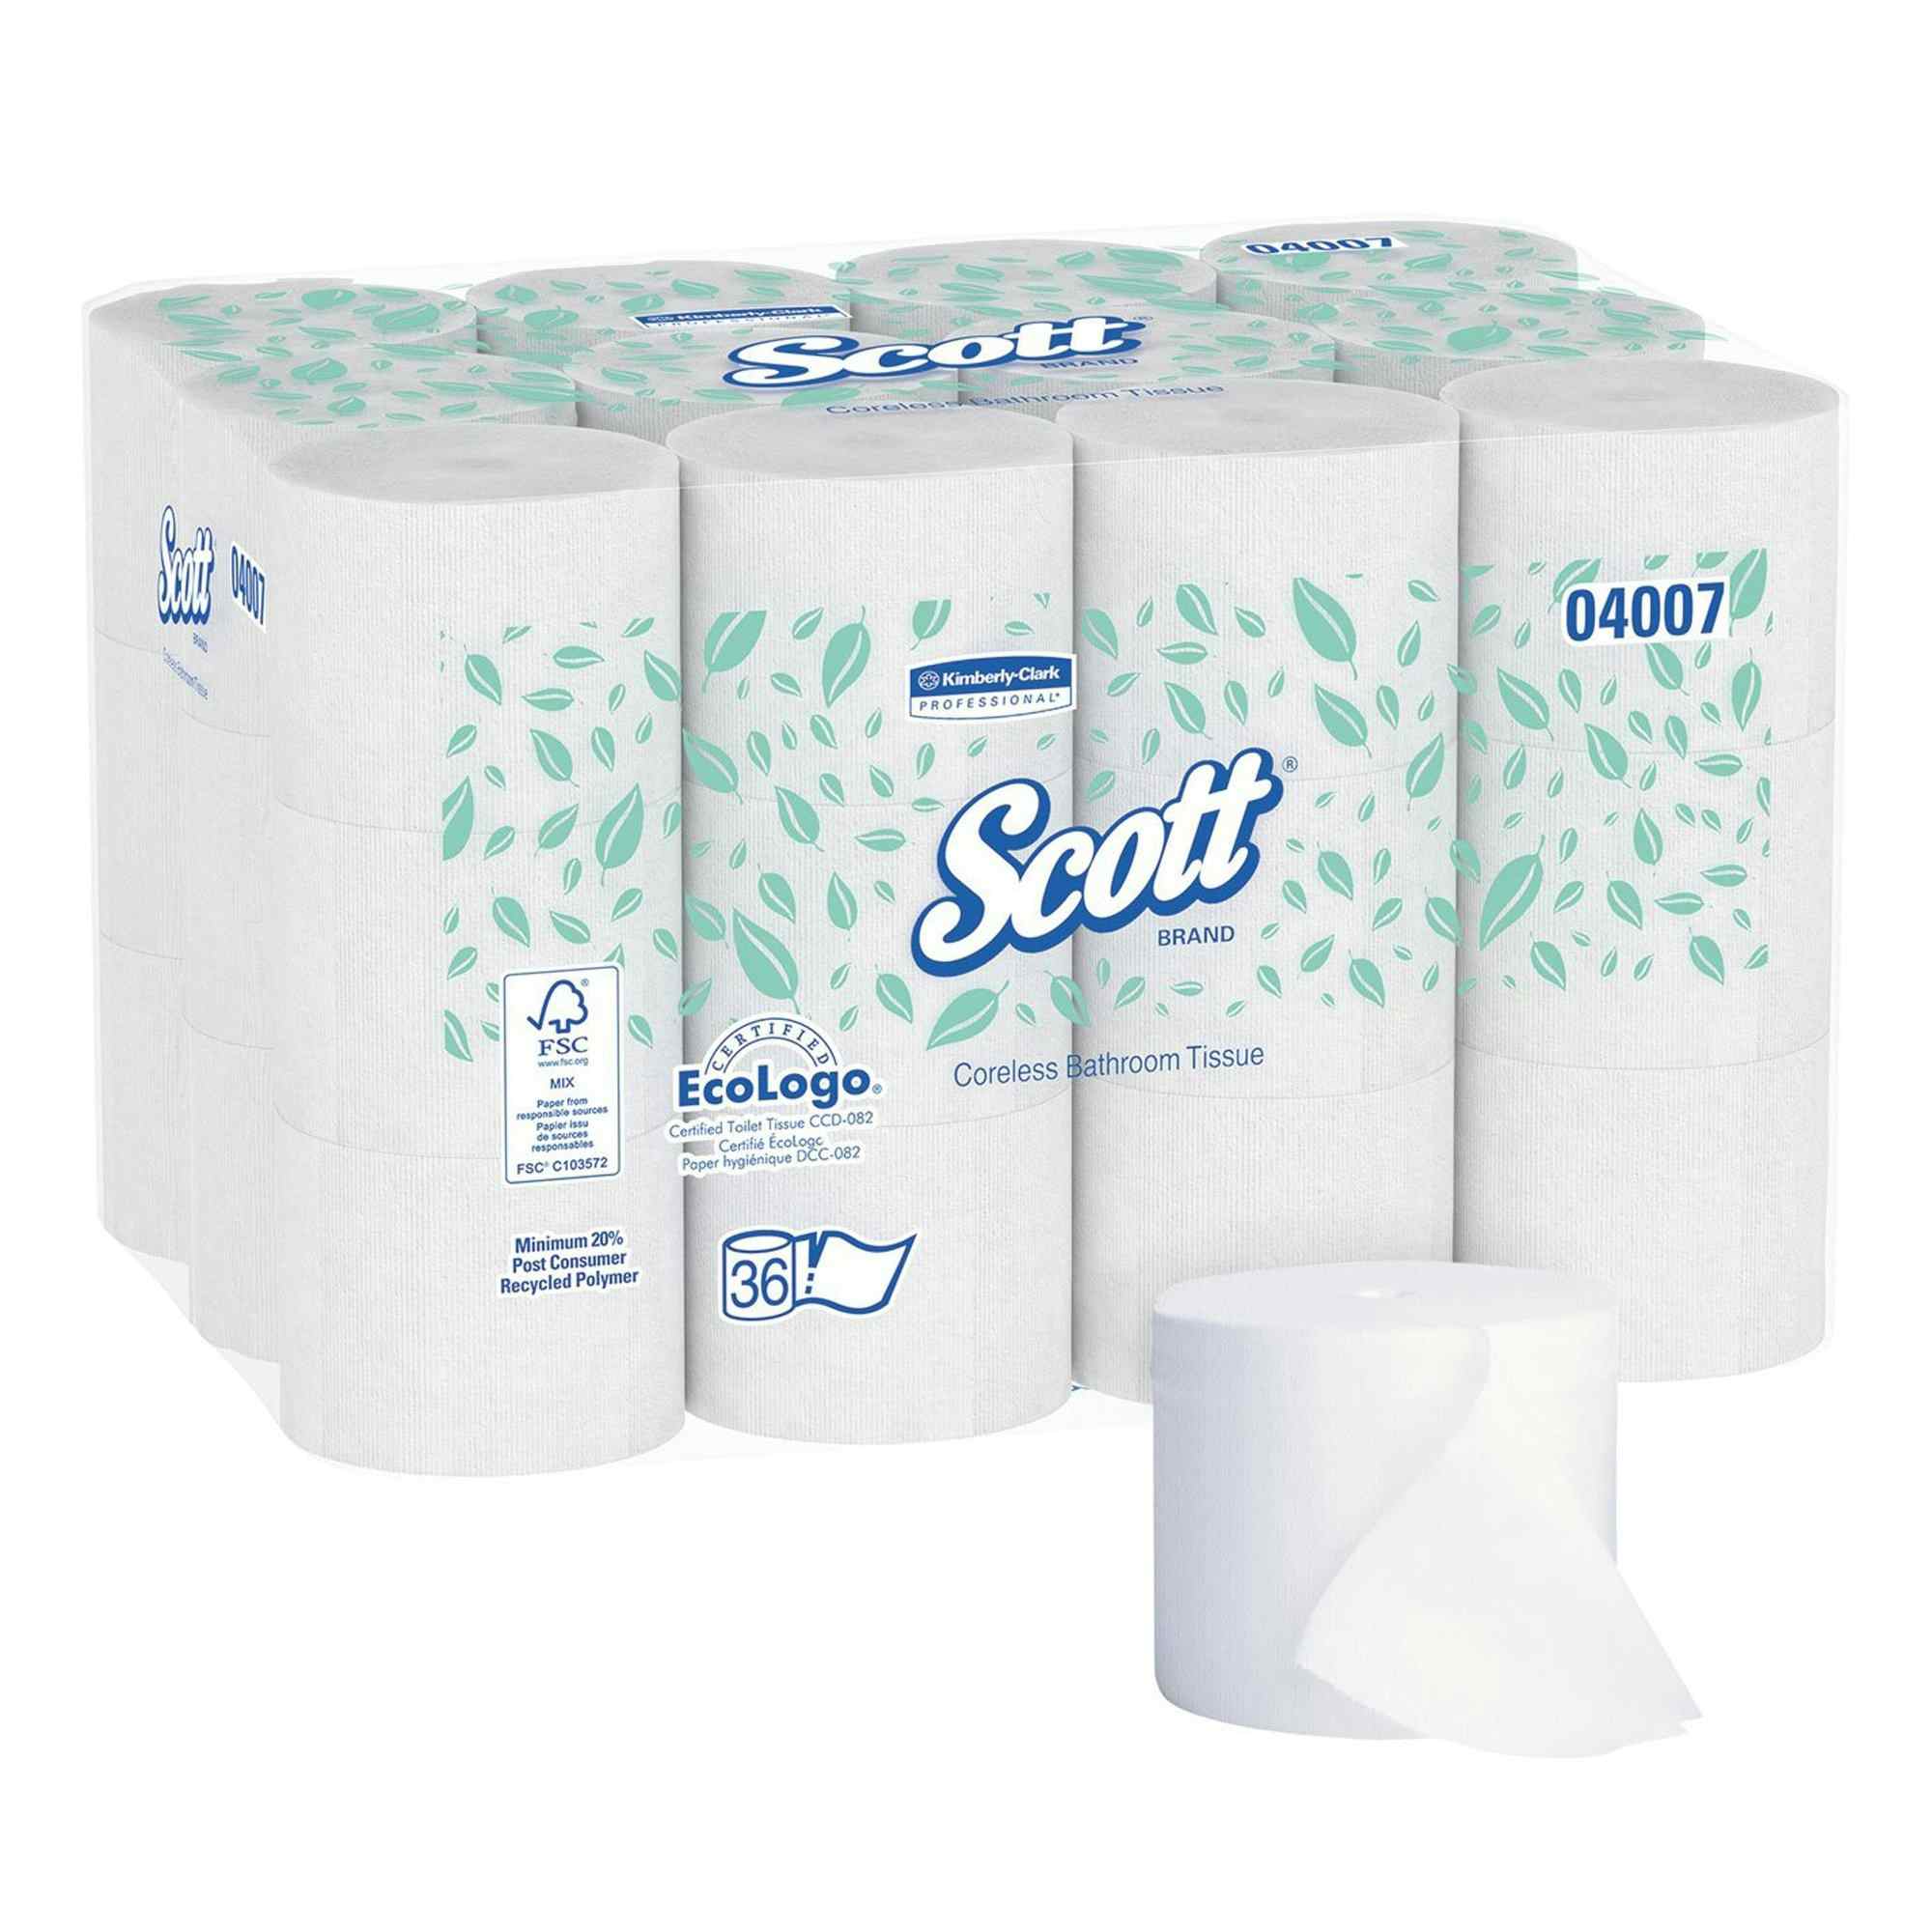 Scott Coreless Bathroom Tissue, 04007, Case of 36